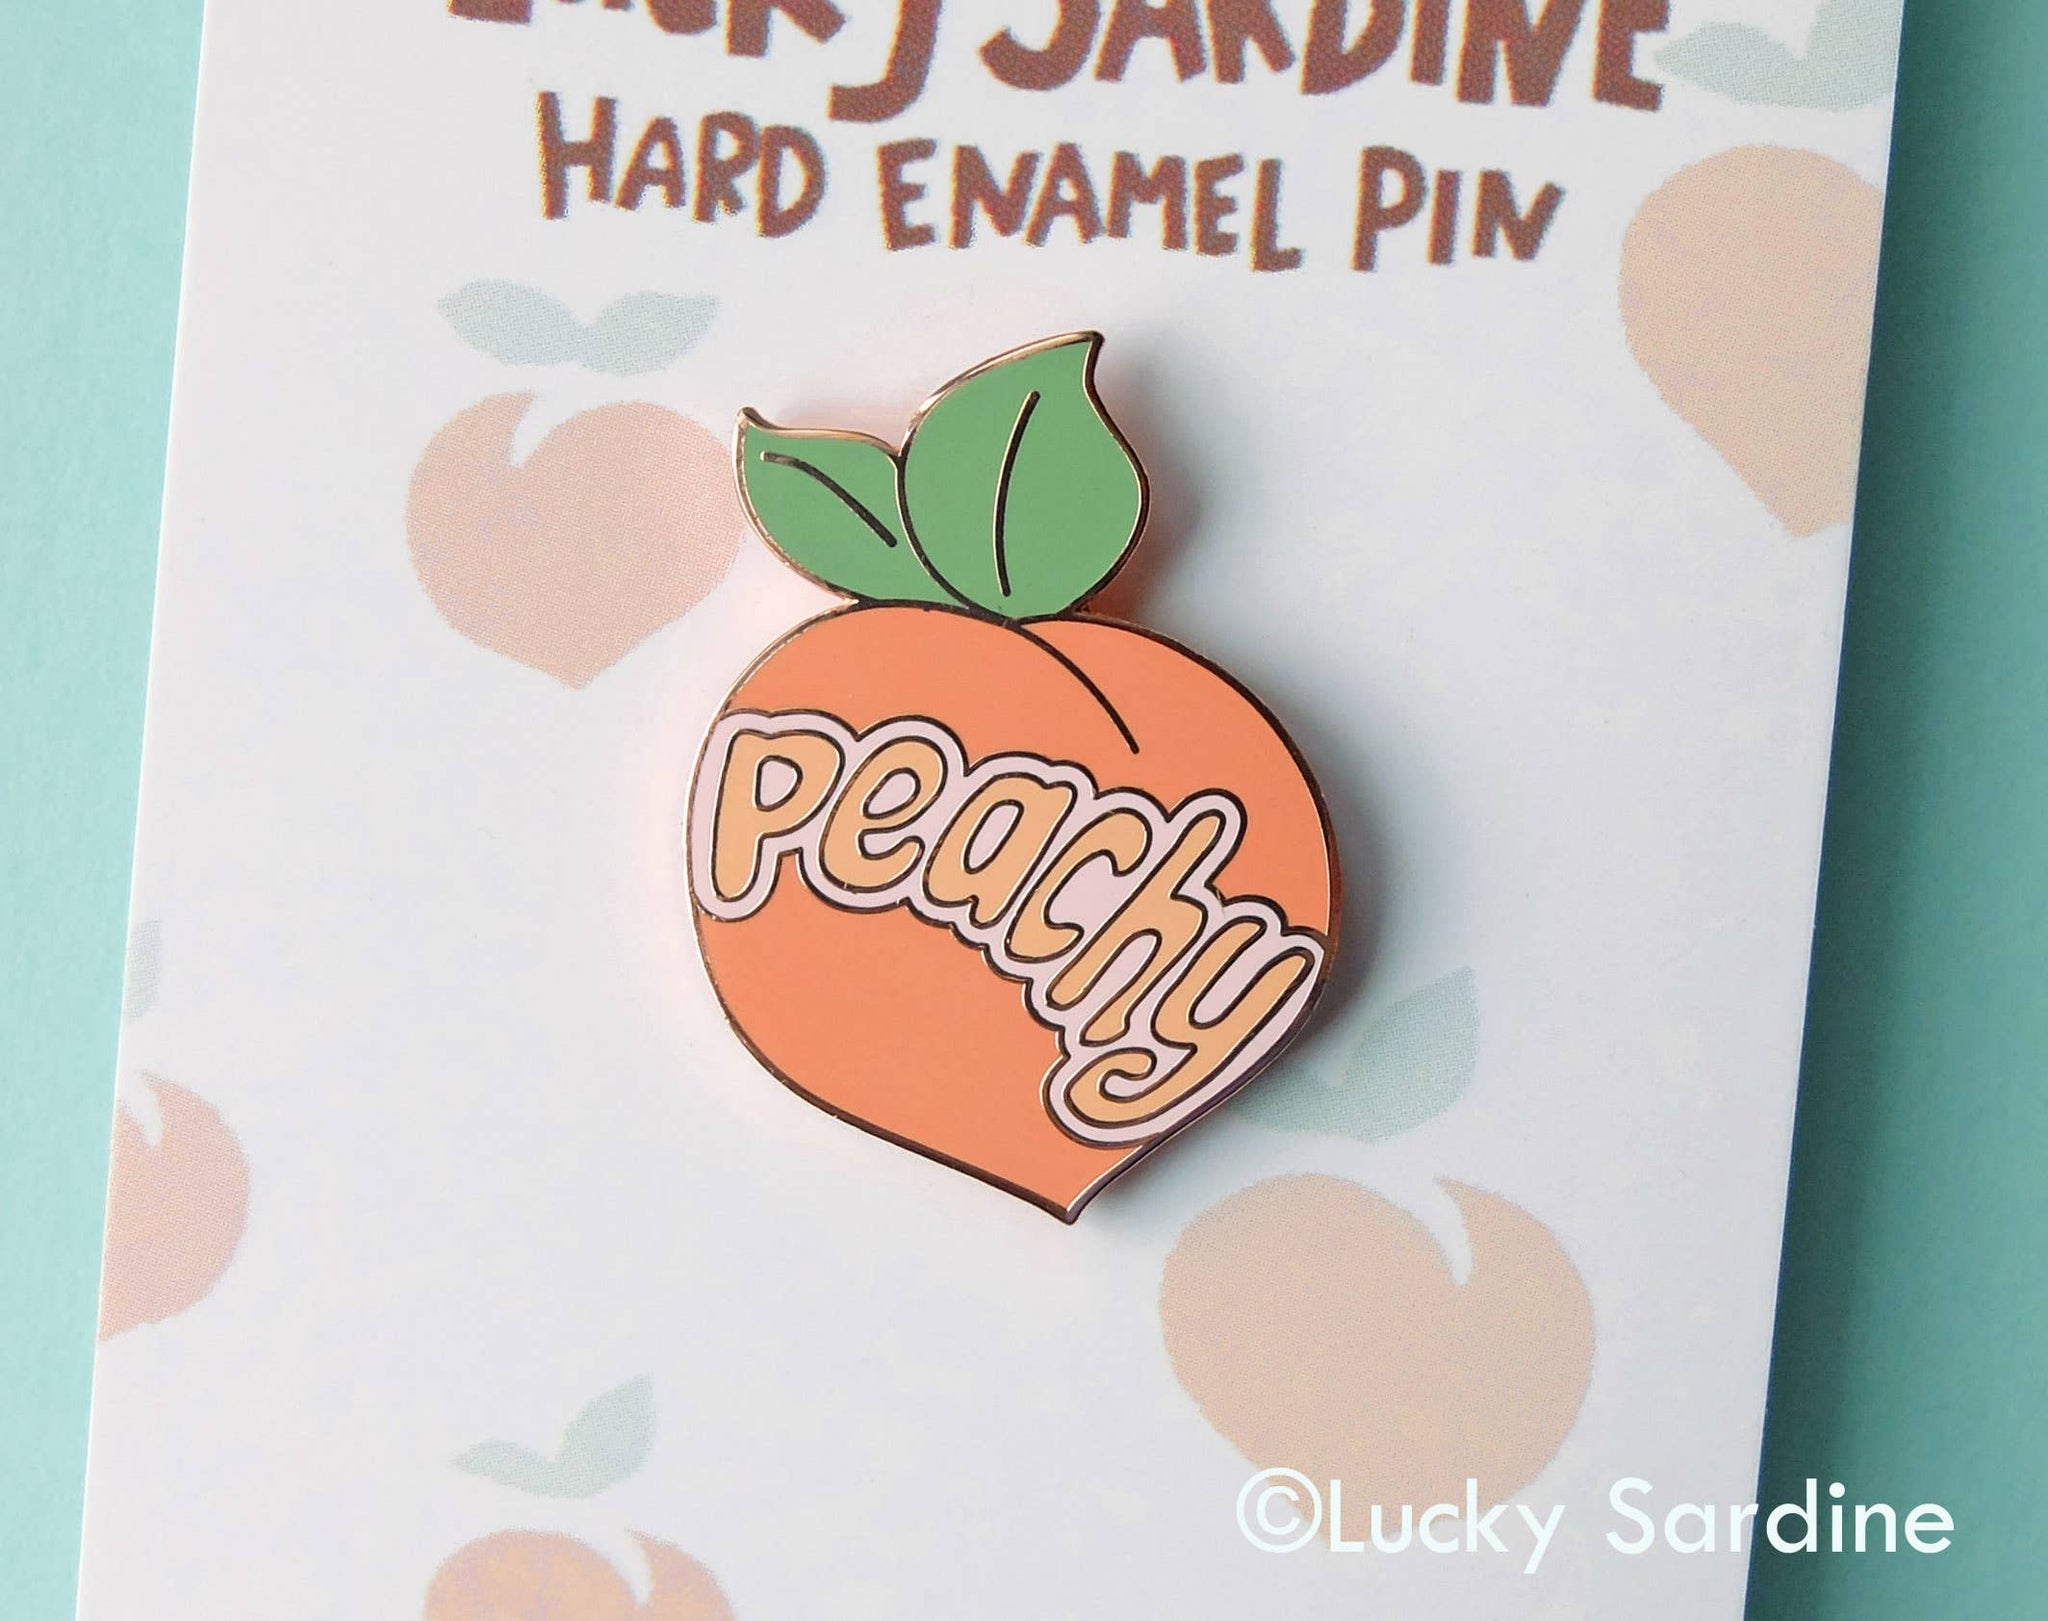 Lucky Sardine - Peachy, Hard Enamel Pin